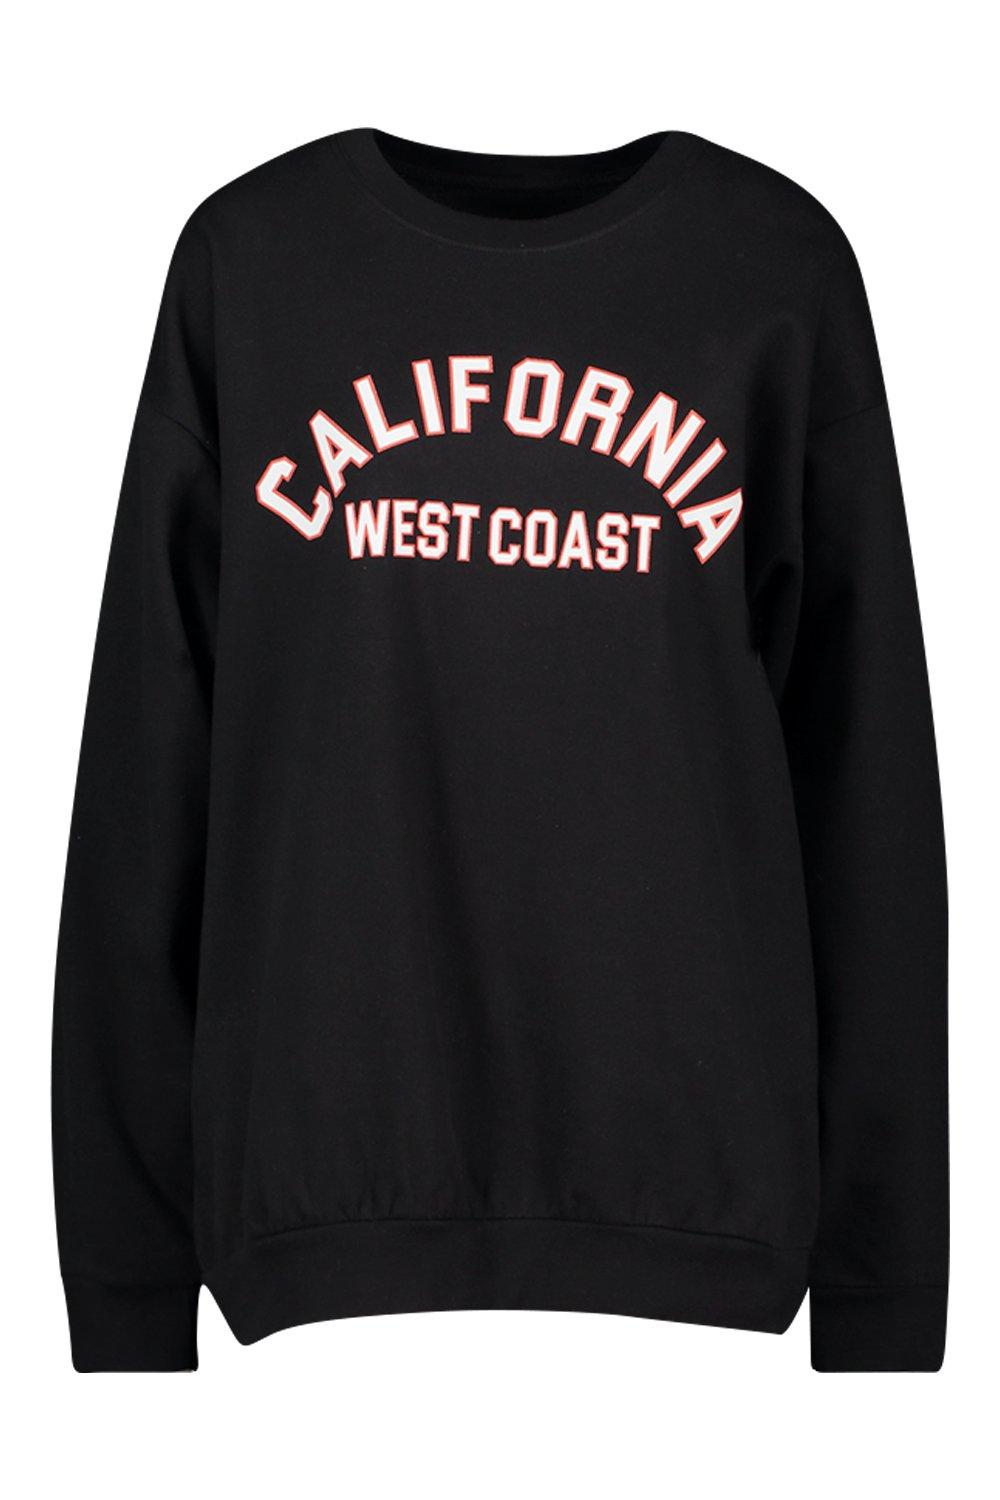 California Slogan Oversized Sweater